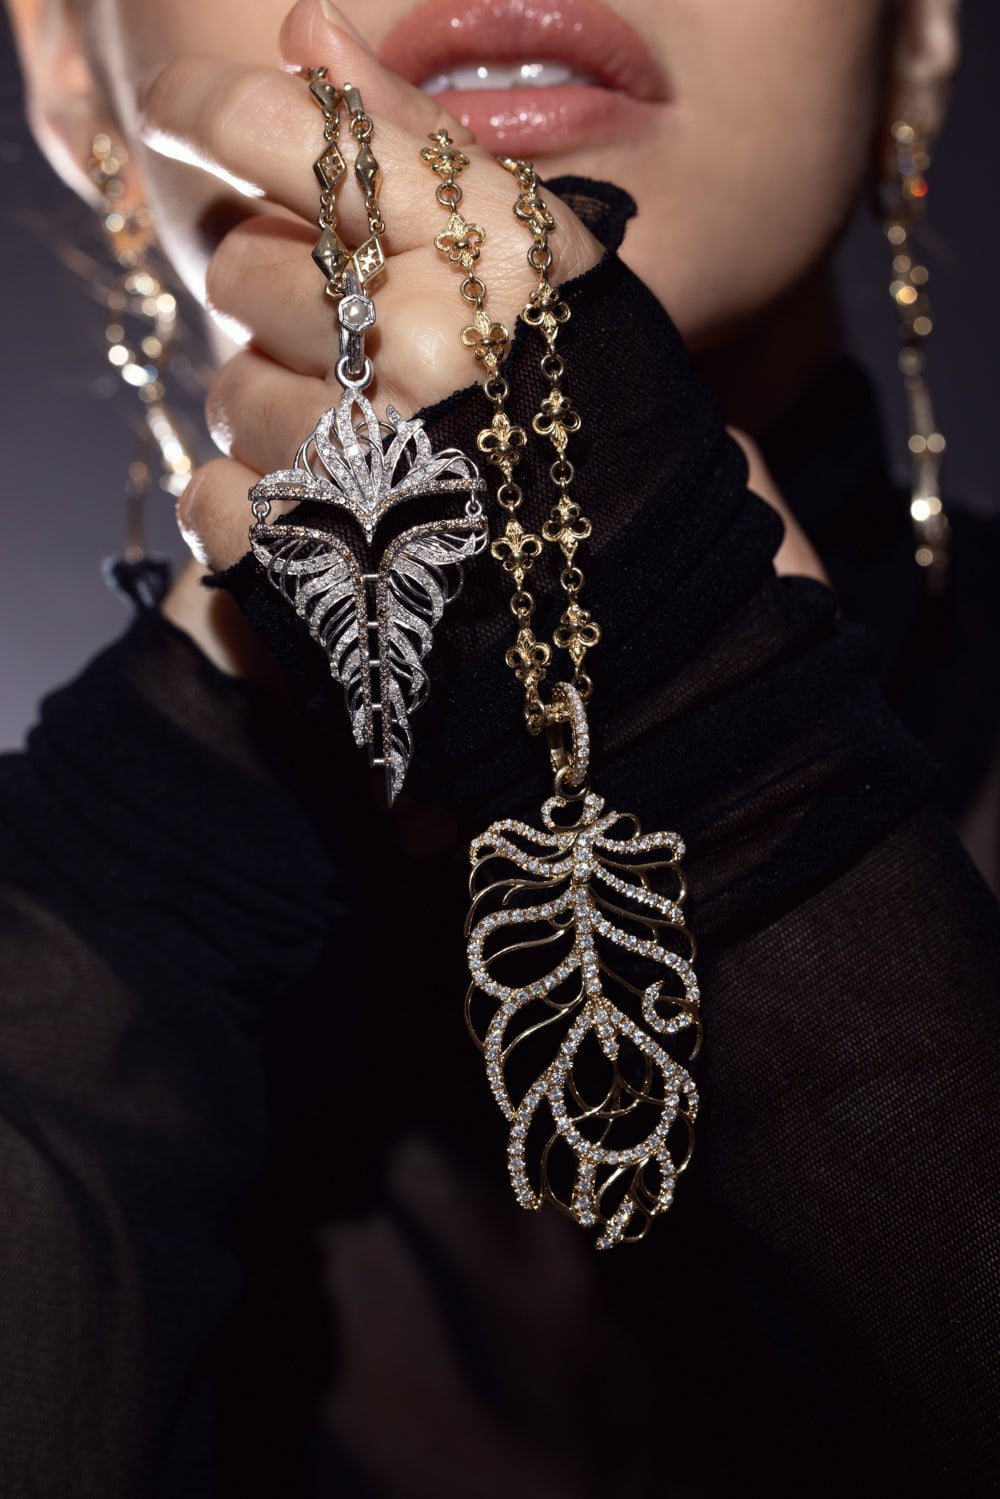 LOREE RODKIN-Tiny Royal Fleur-De-Lis Link Chain Necklace-YELLOW GOLD